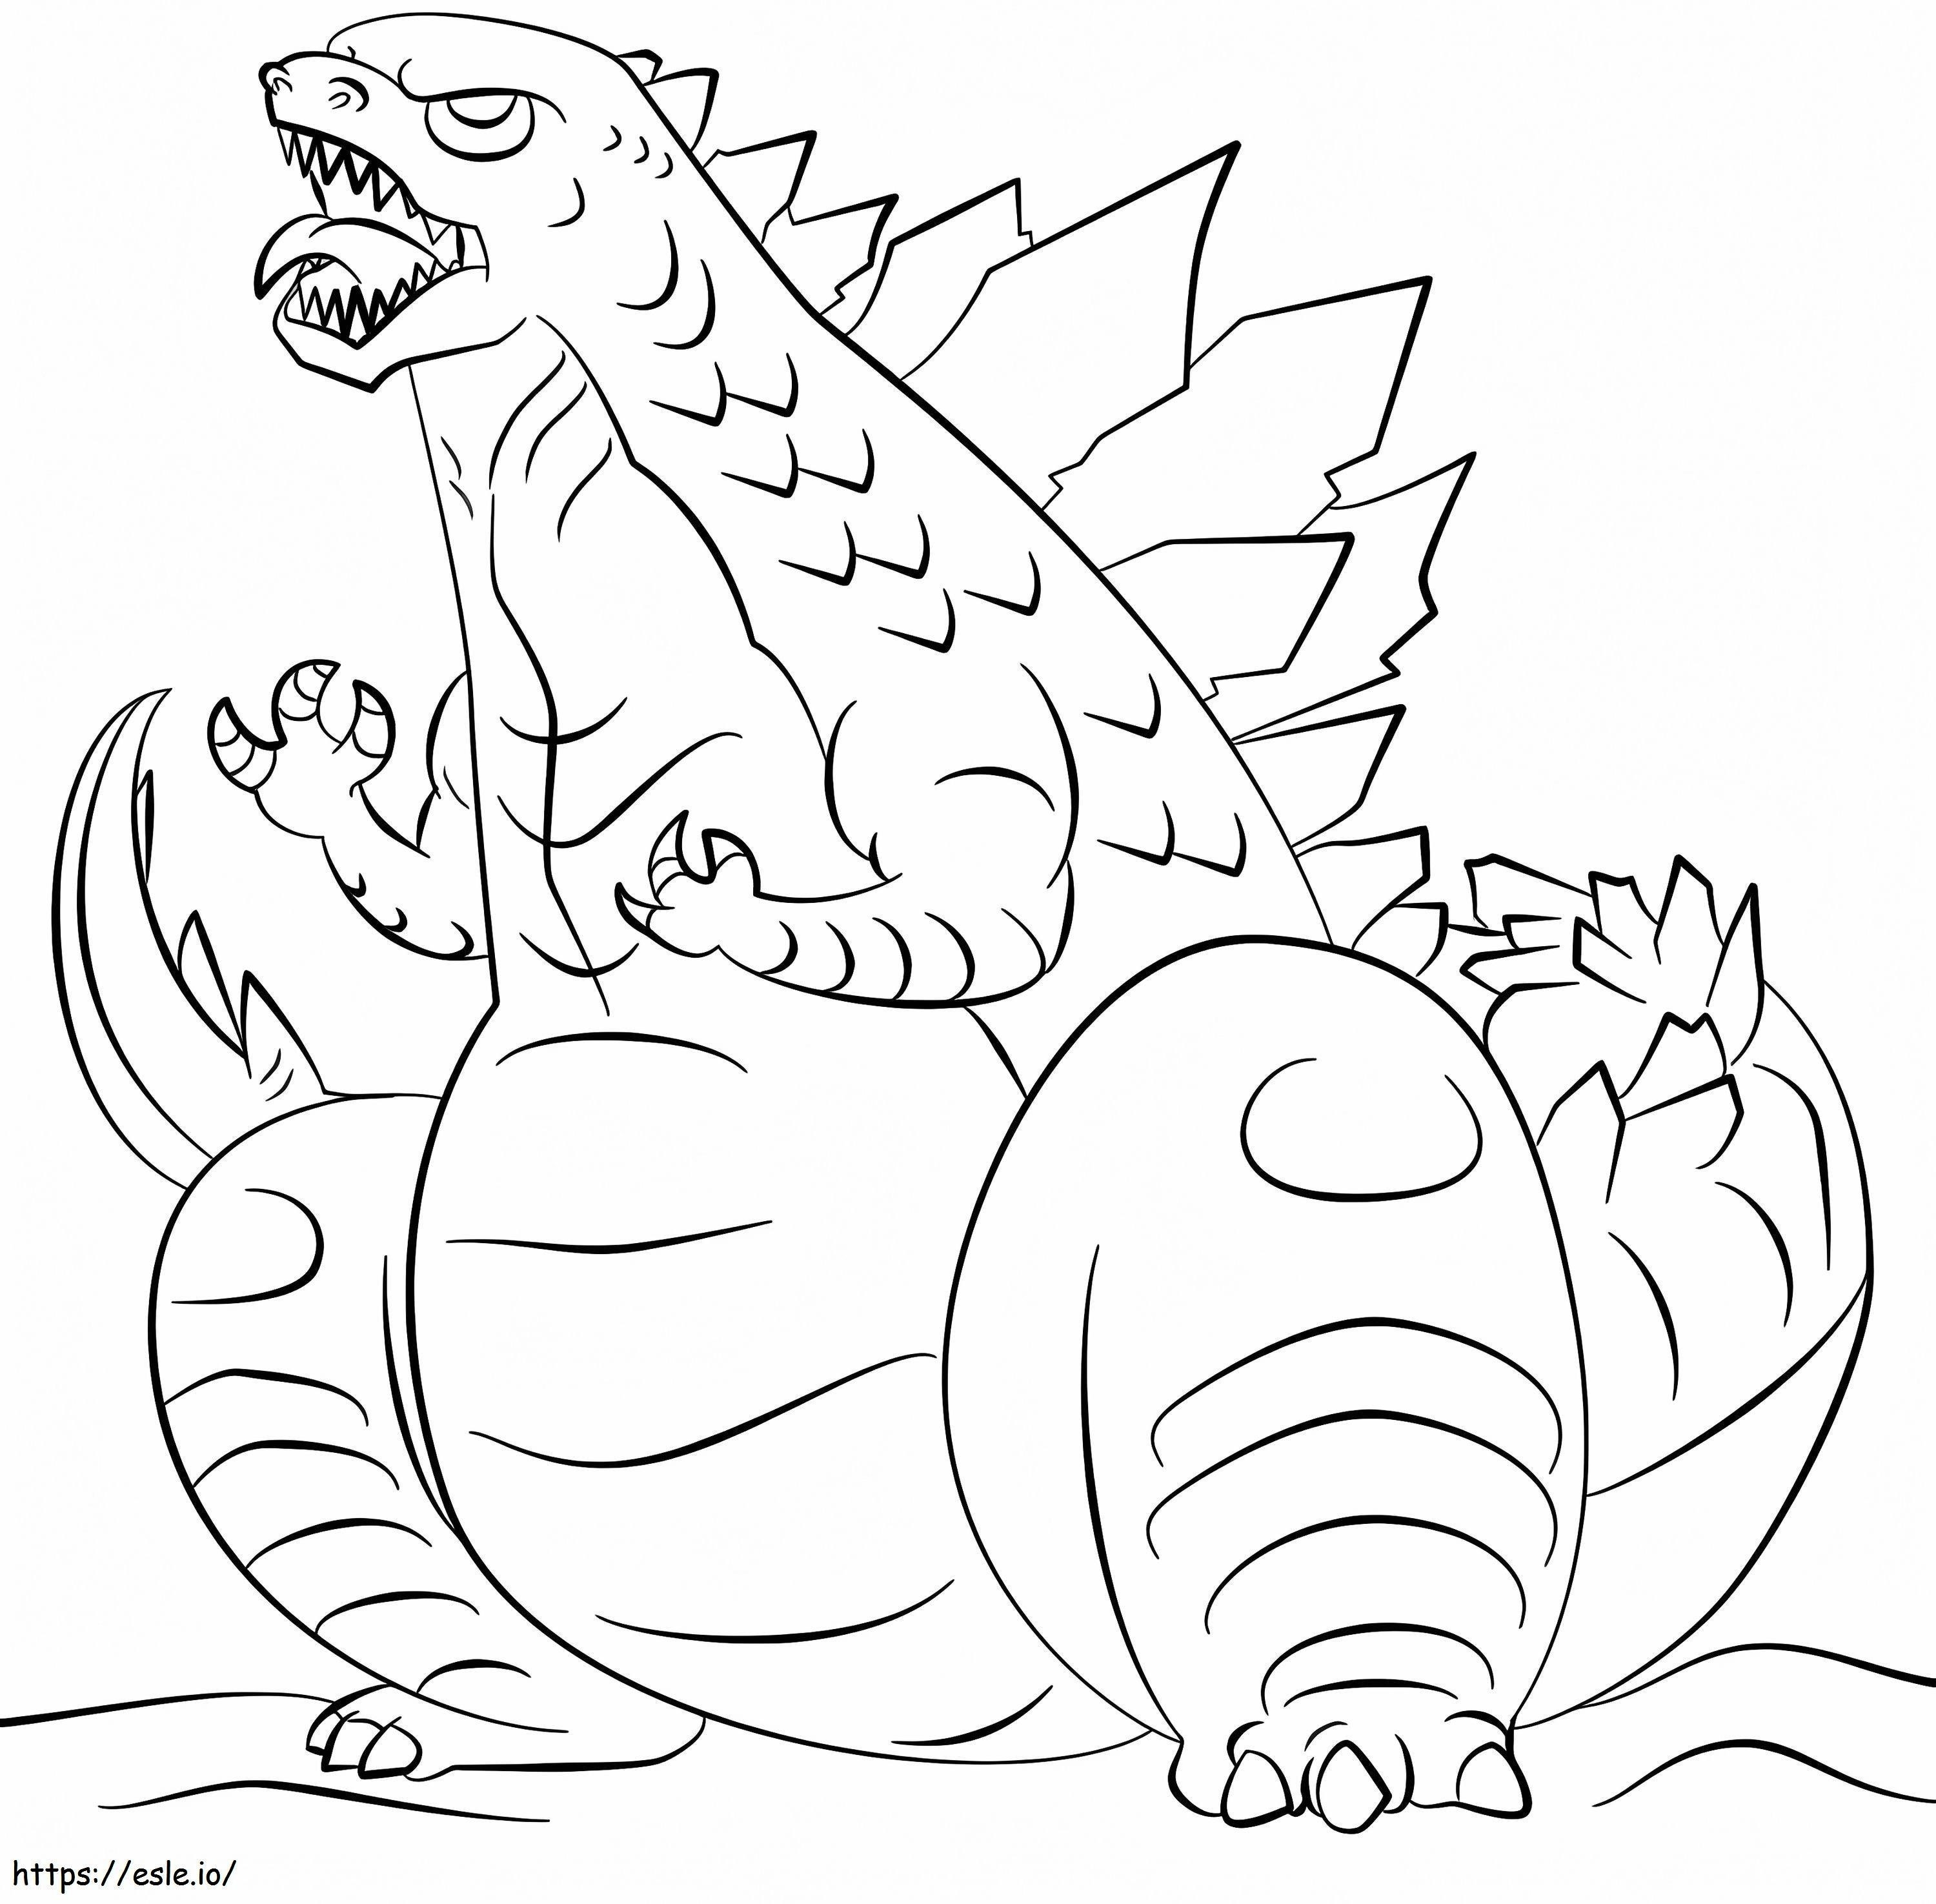 Coloriage Godzilla est drôle à imprimer dessin